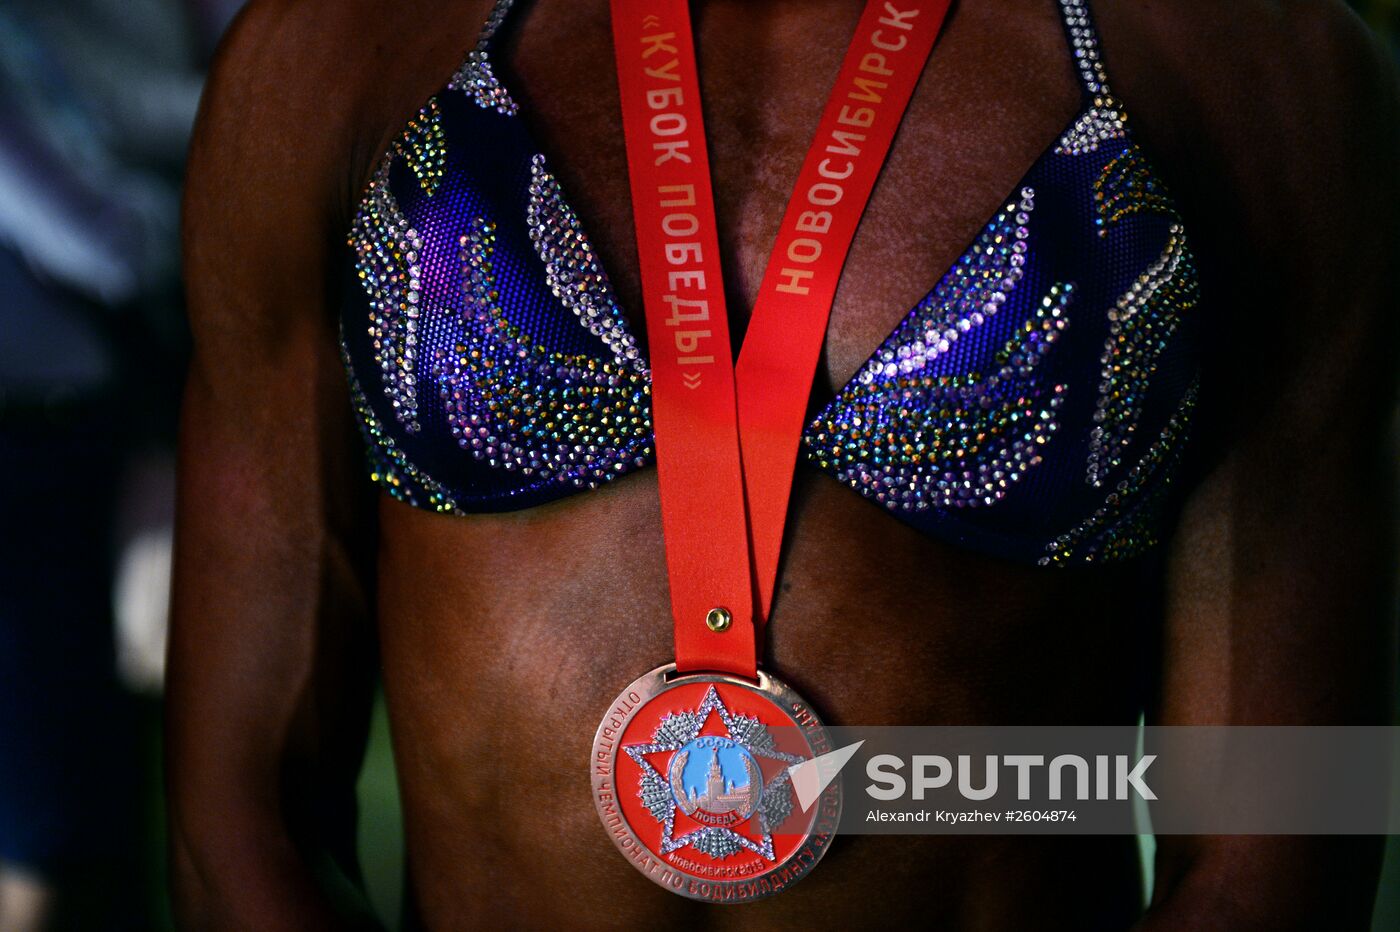 Bodybuilding Championships of Siberia